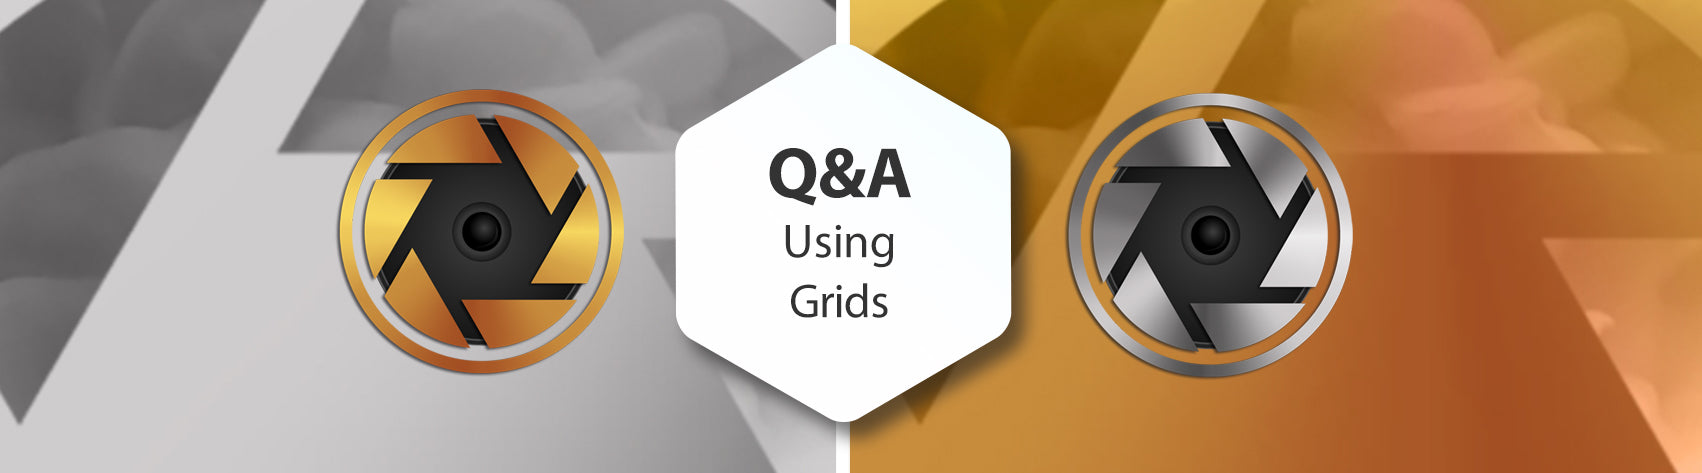 Q&A Using Grids